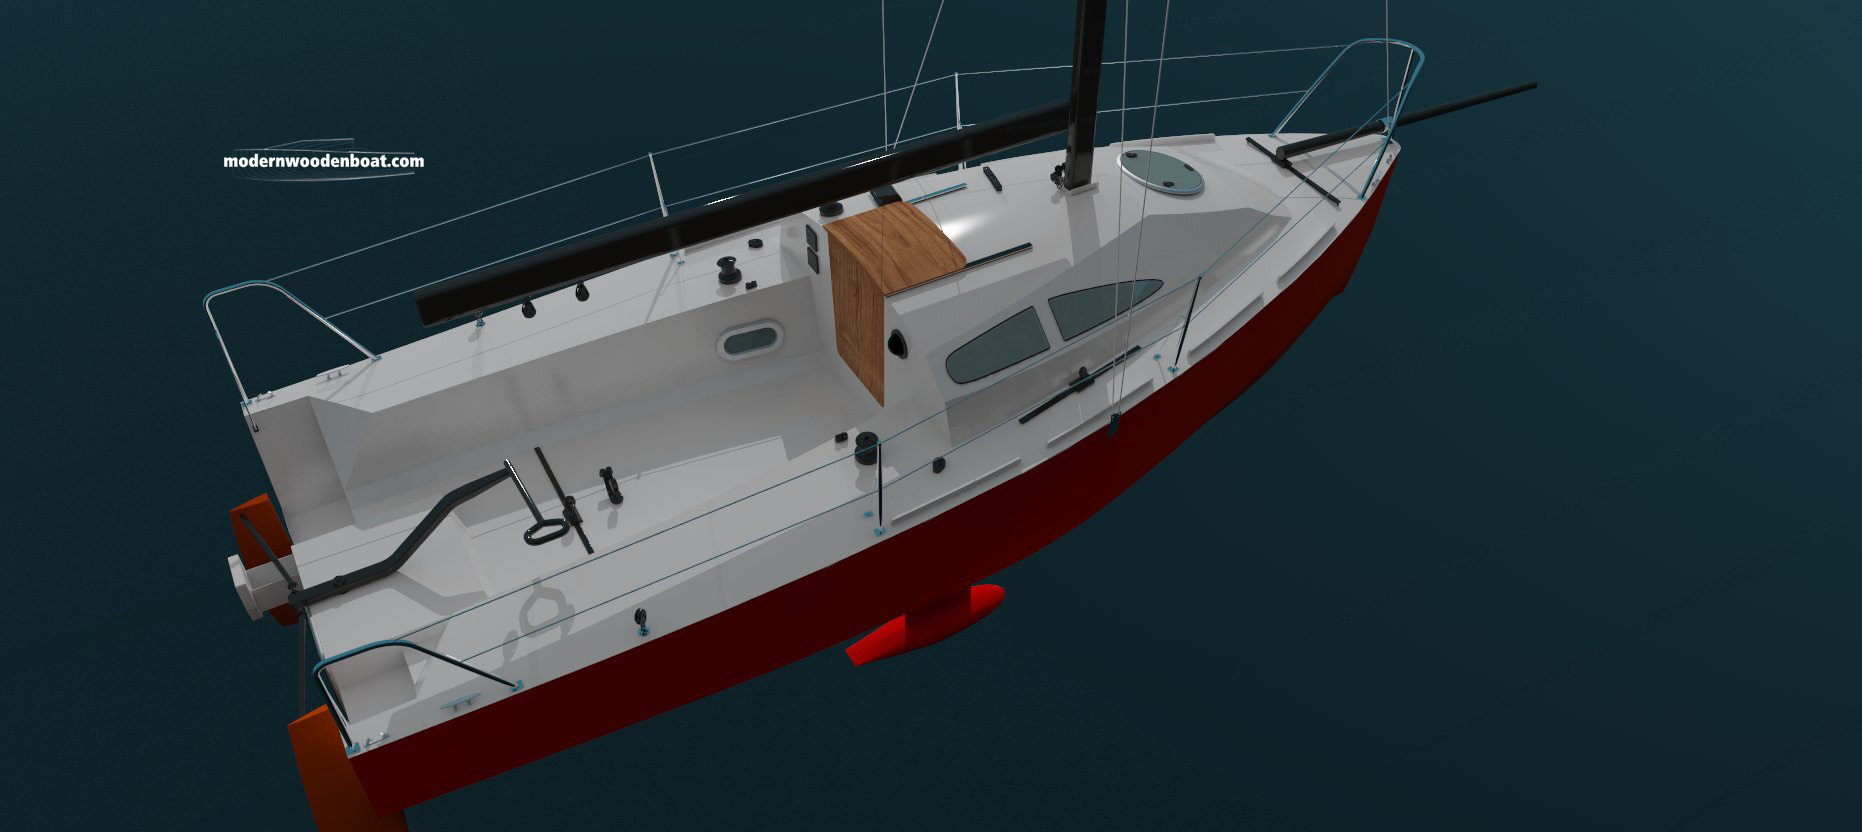 idea-21-radiuschine-epoxy-plywood-sportboat-04